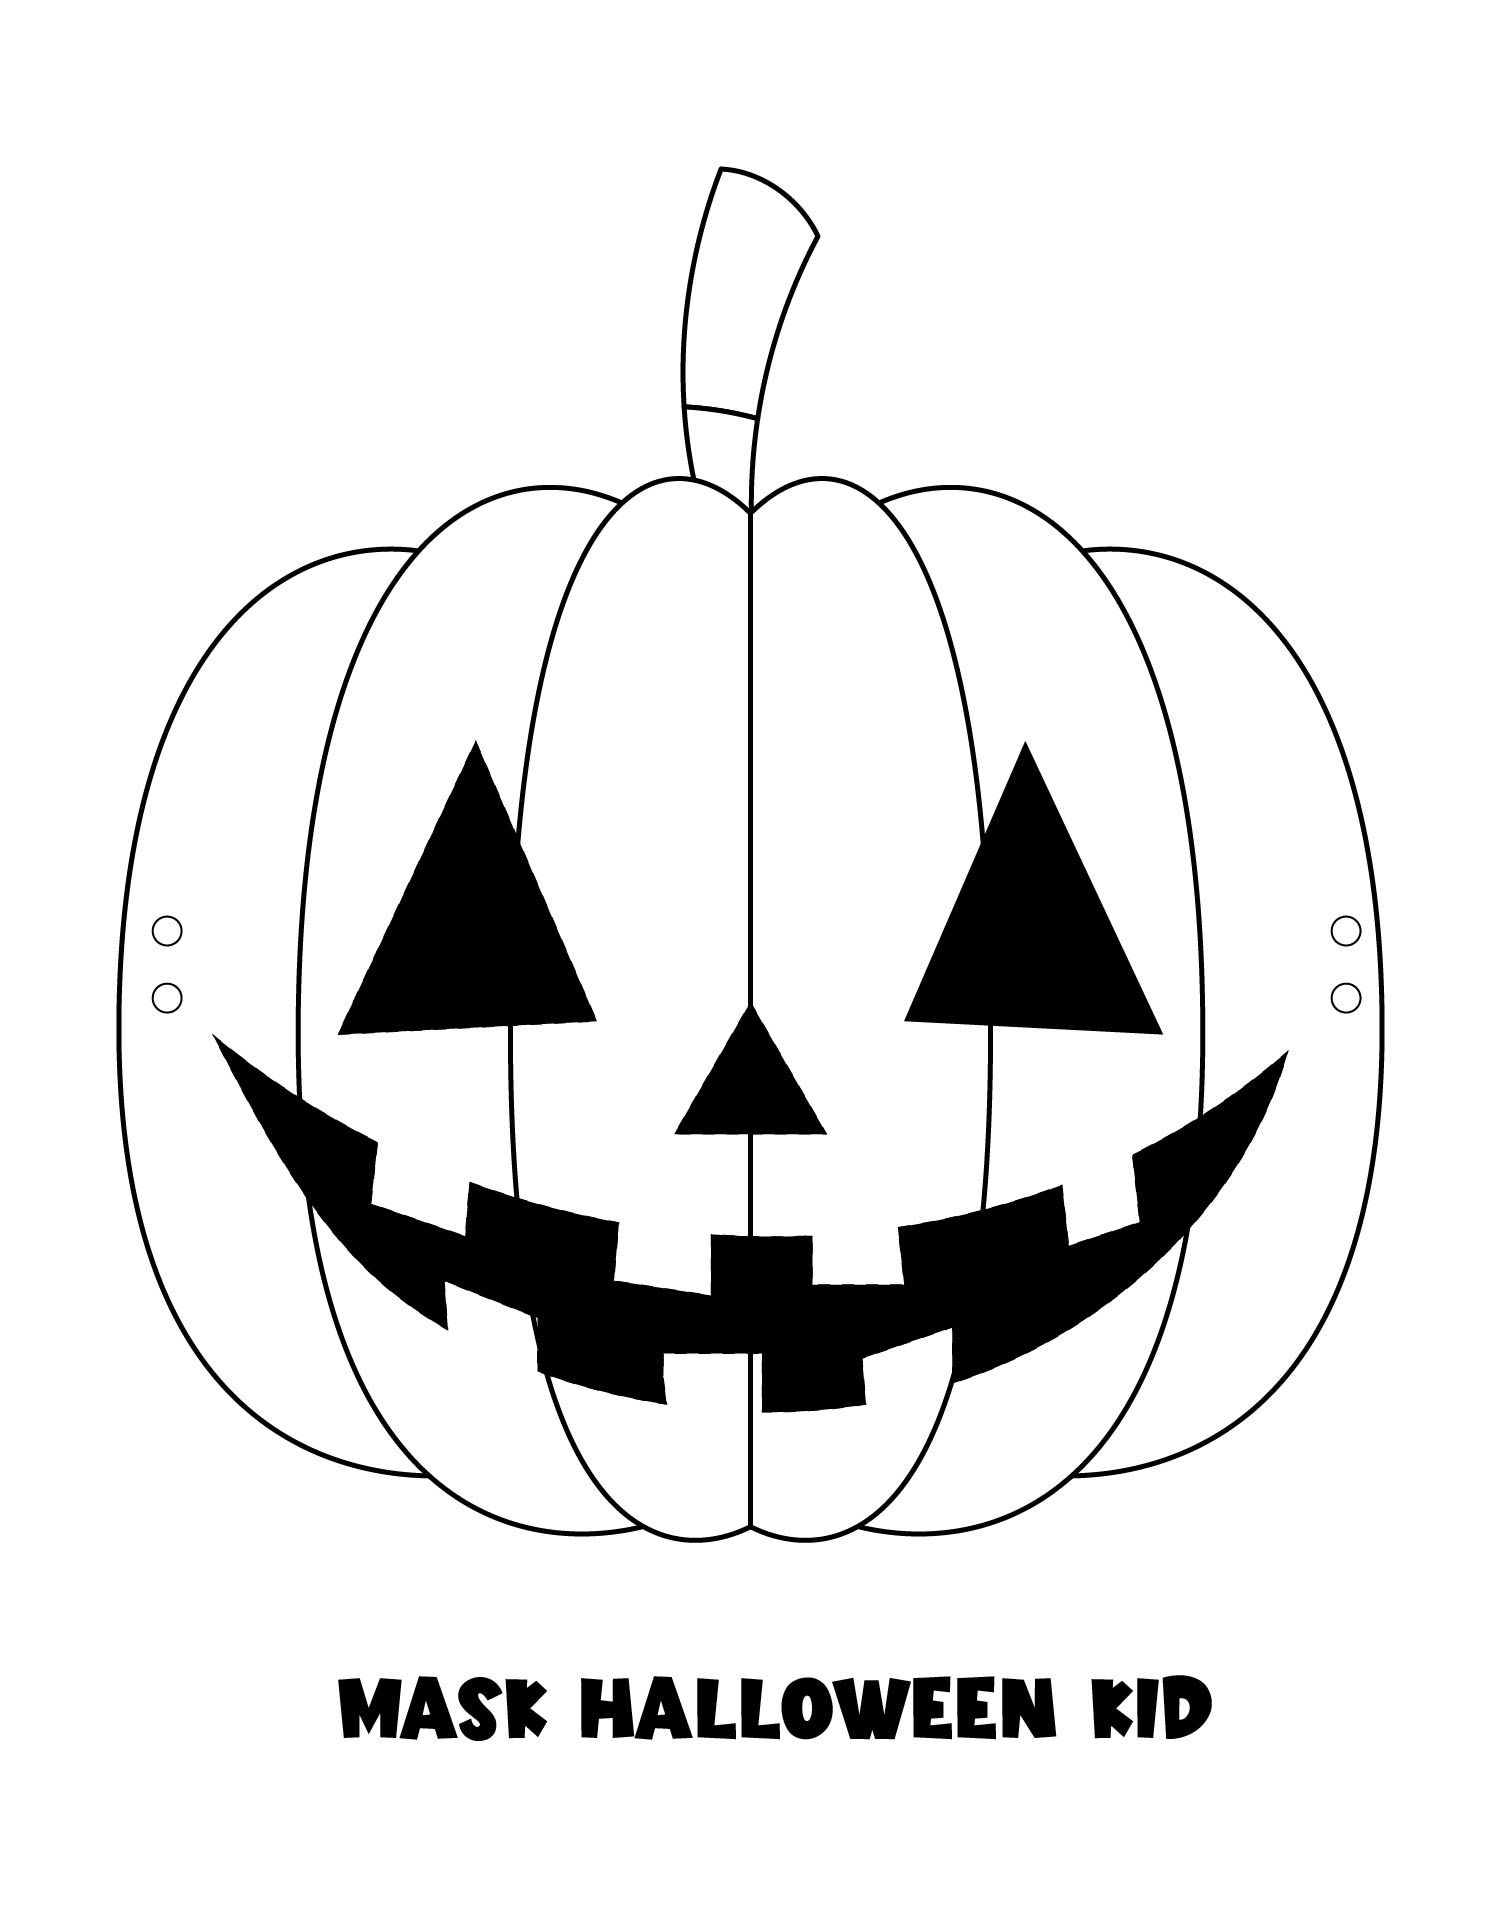 Pumpkin Mask Halloween Kid Costume Template Printable